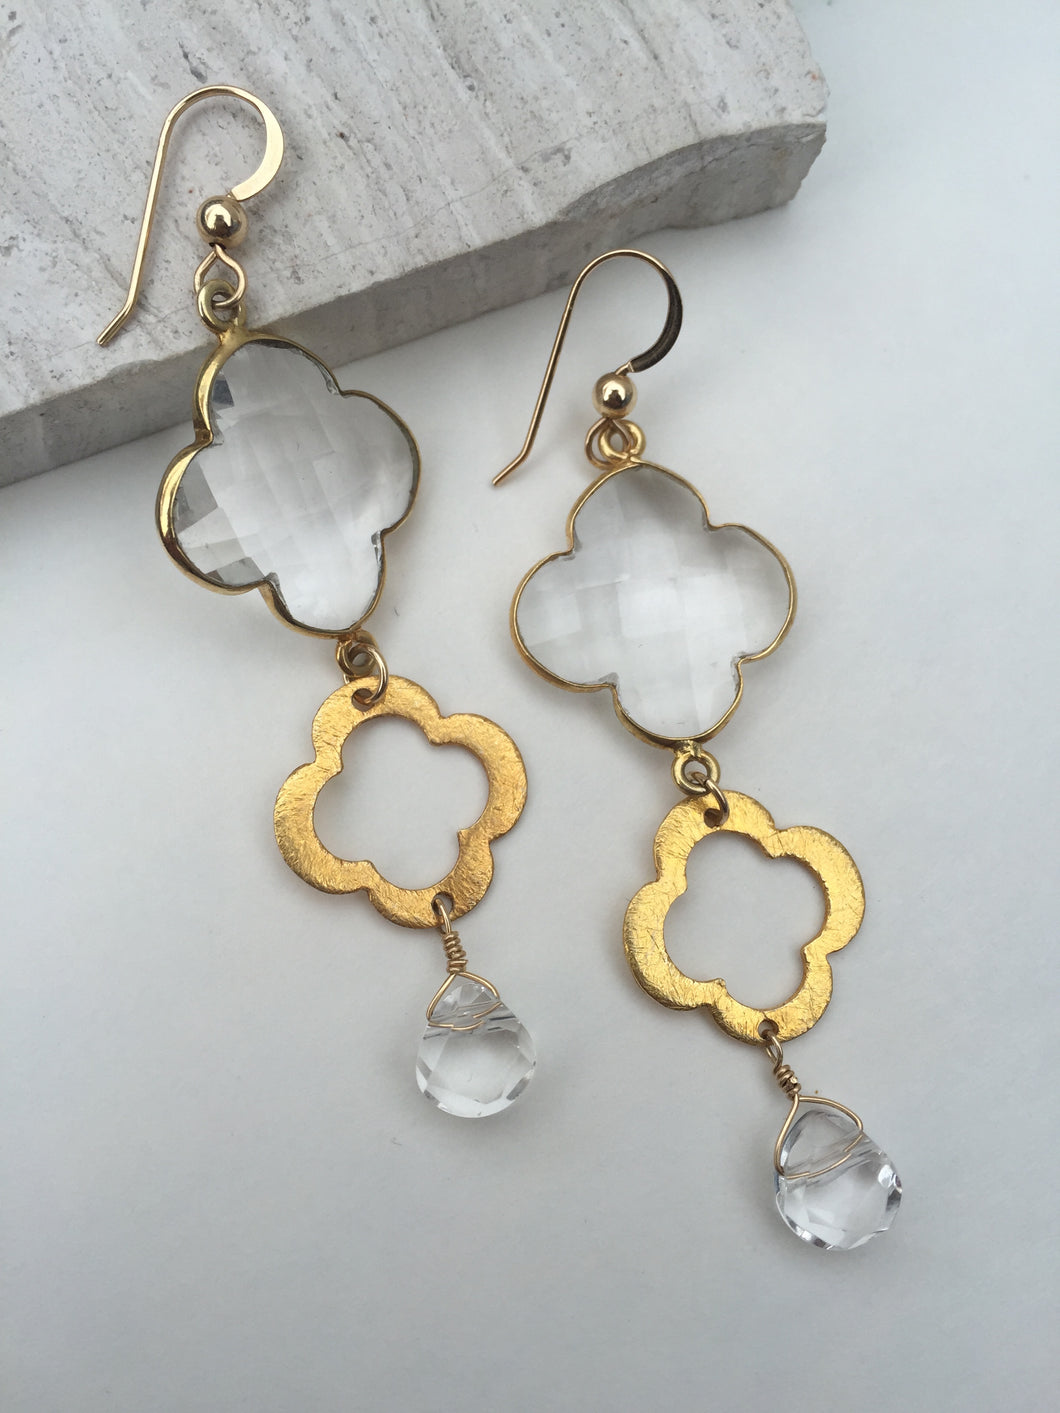 Quartz Crystal Quatrefoil Earrings gold